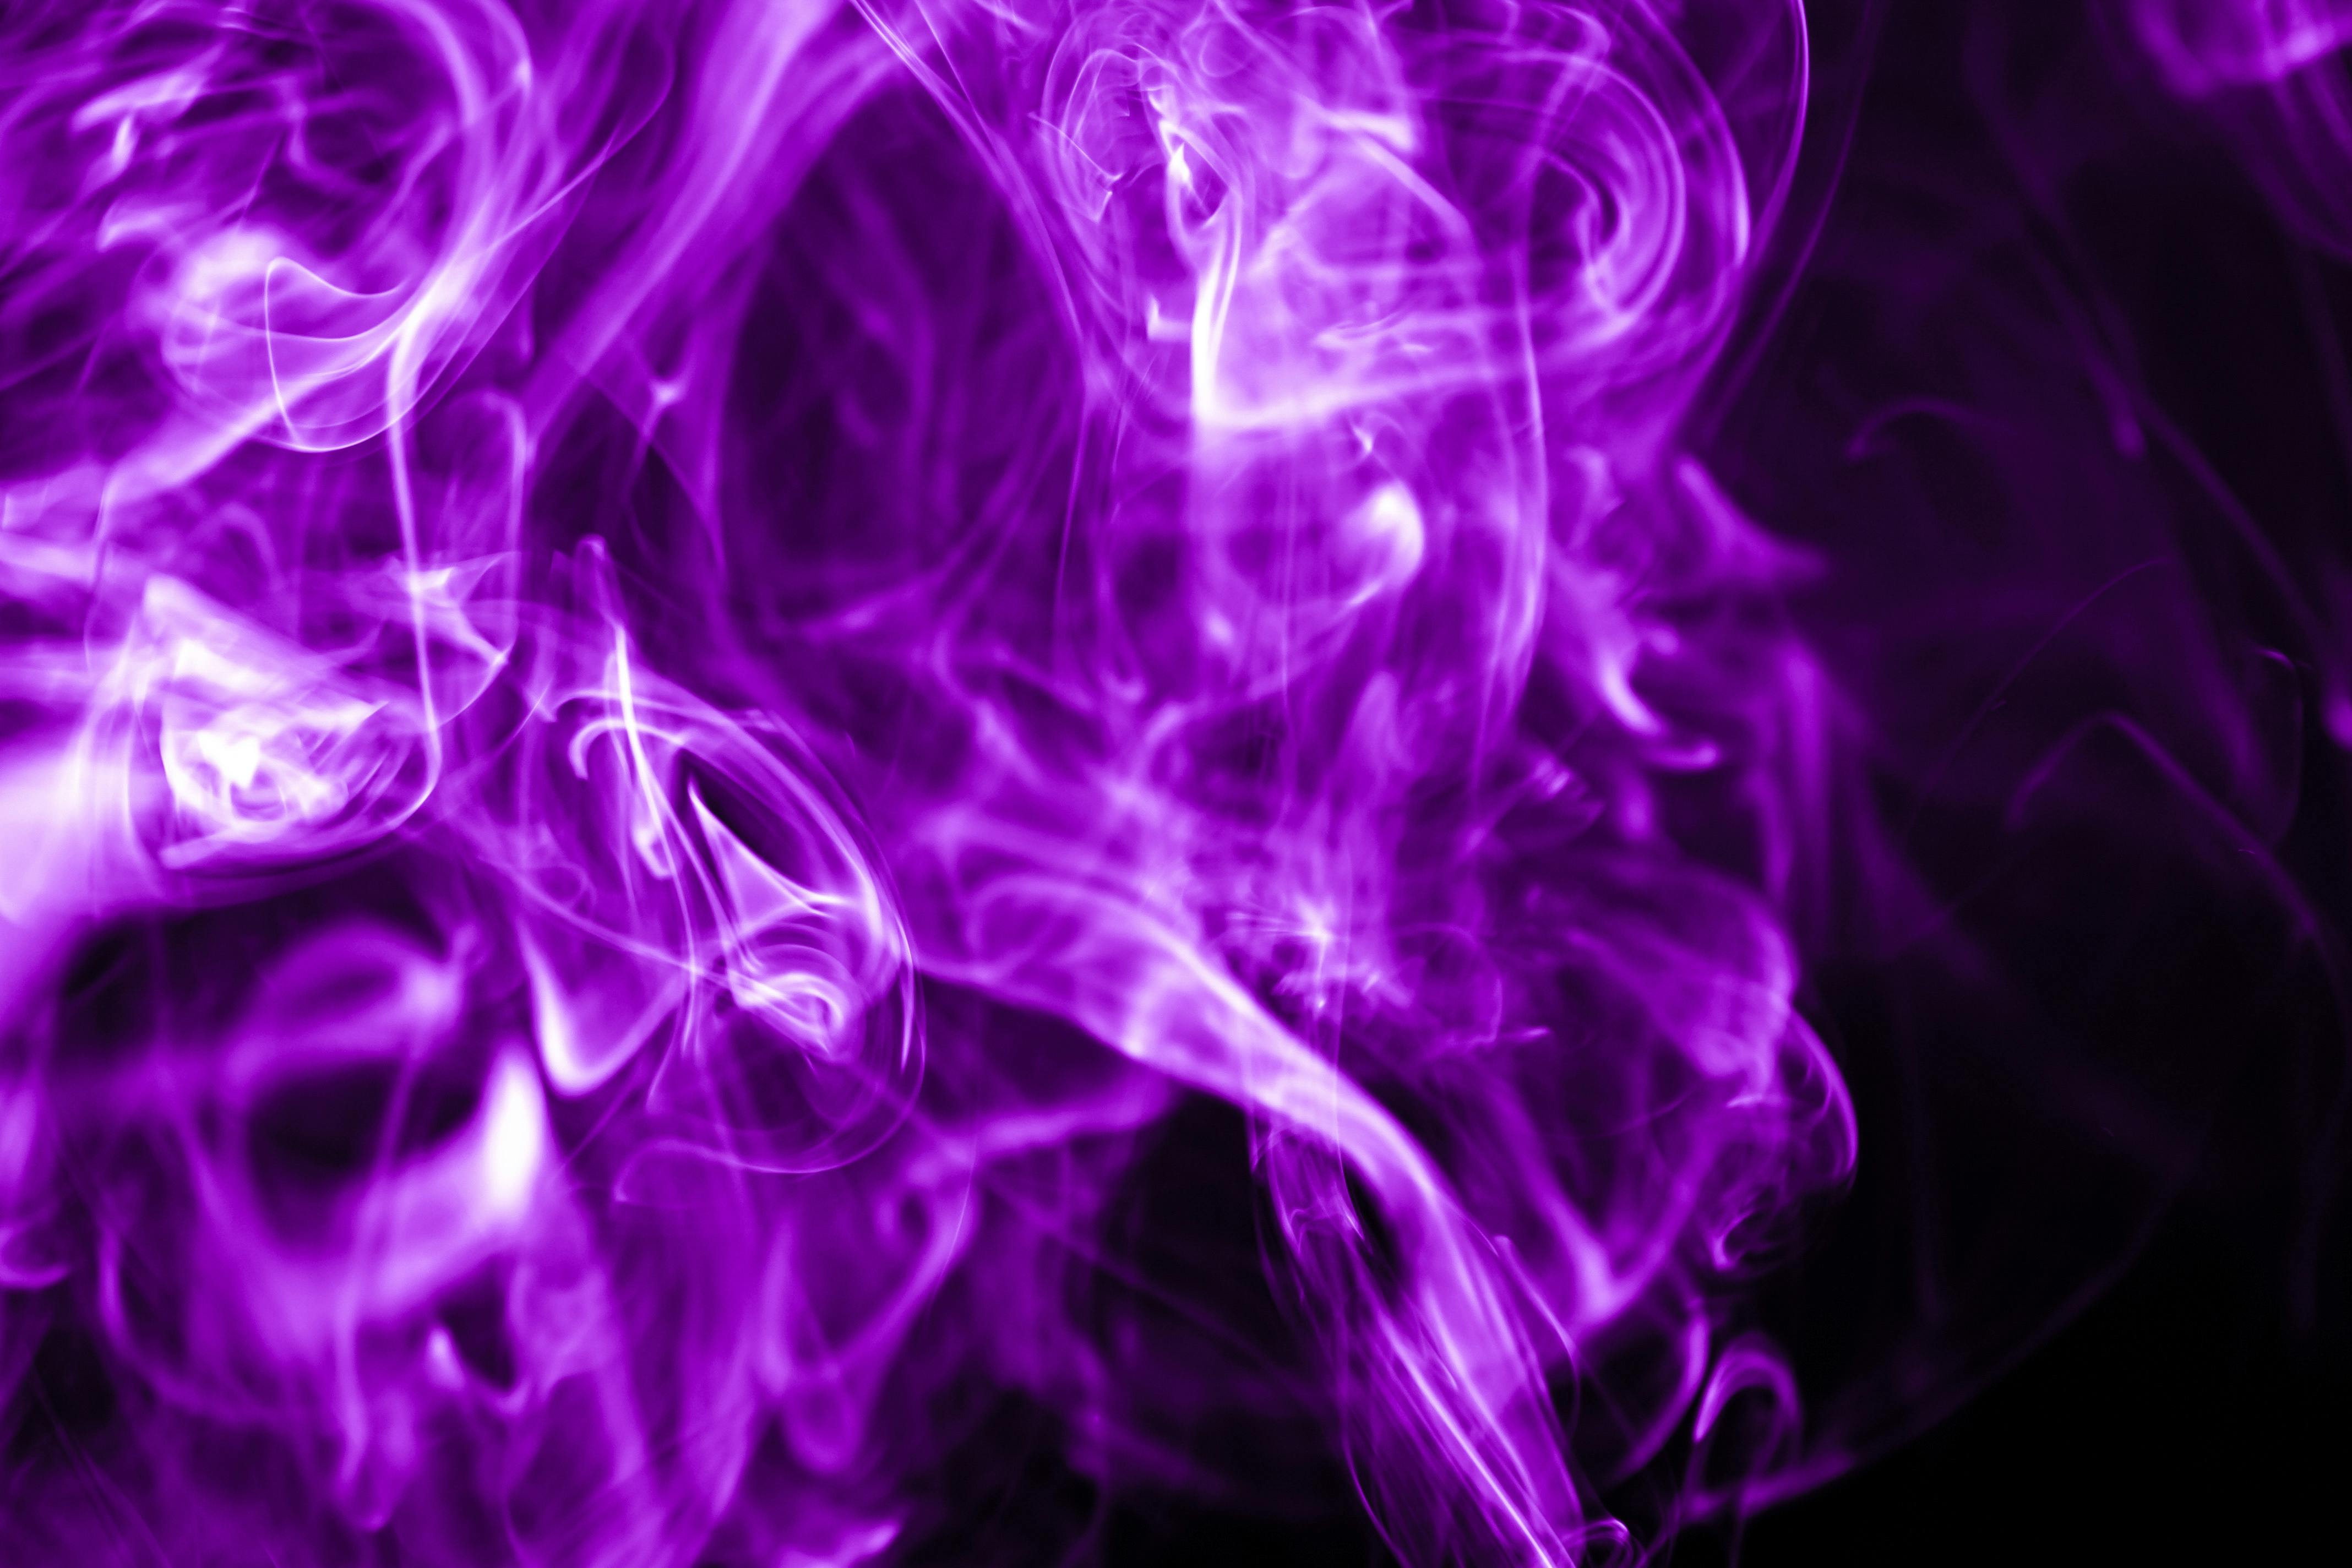 206312 Purple Smoke Images Stock Photos  Vectors  Shutterstock